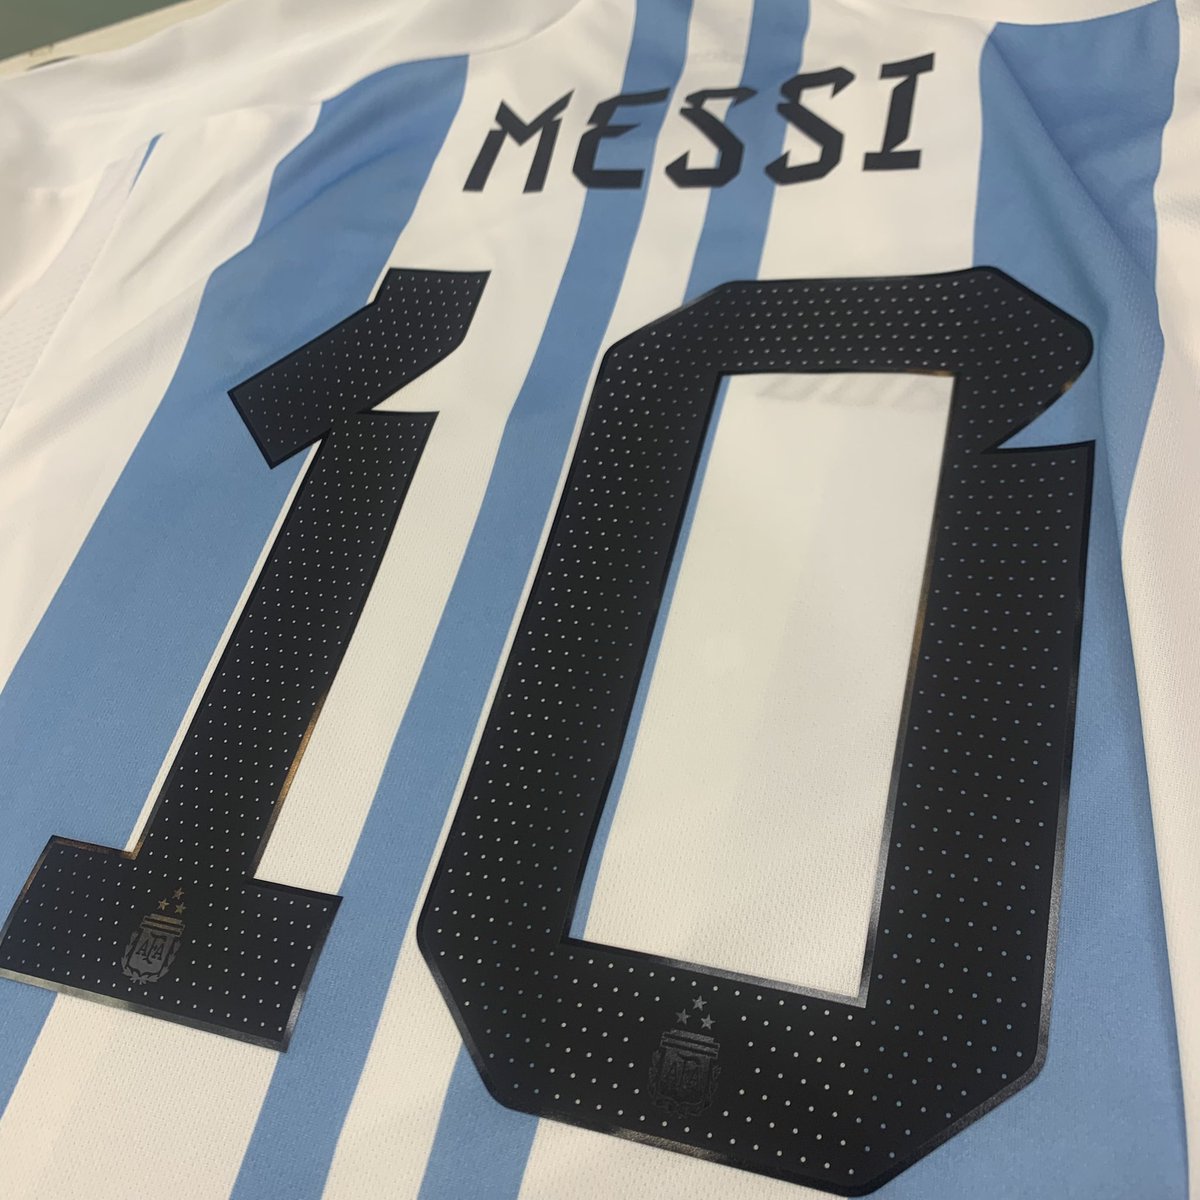 💥 AVAILABLE NOW 💥

Argentina 2023 Home Nameset 3stars ⭐️⭐️⭐️

untuk jersey original

IDR 380.000 ( Hanya Harga Nameset)

#nameset4sale #jersey4sale @Jerseyforum